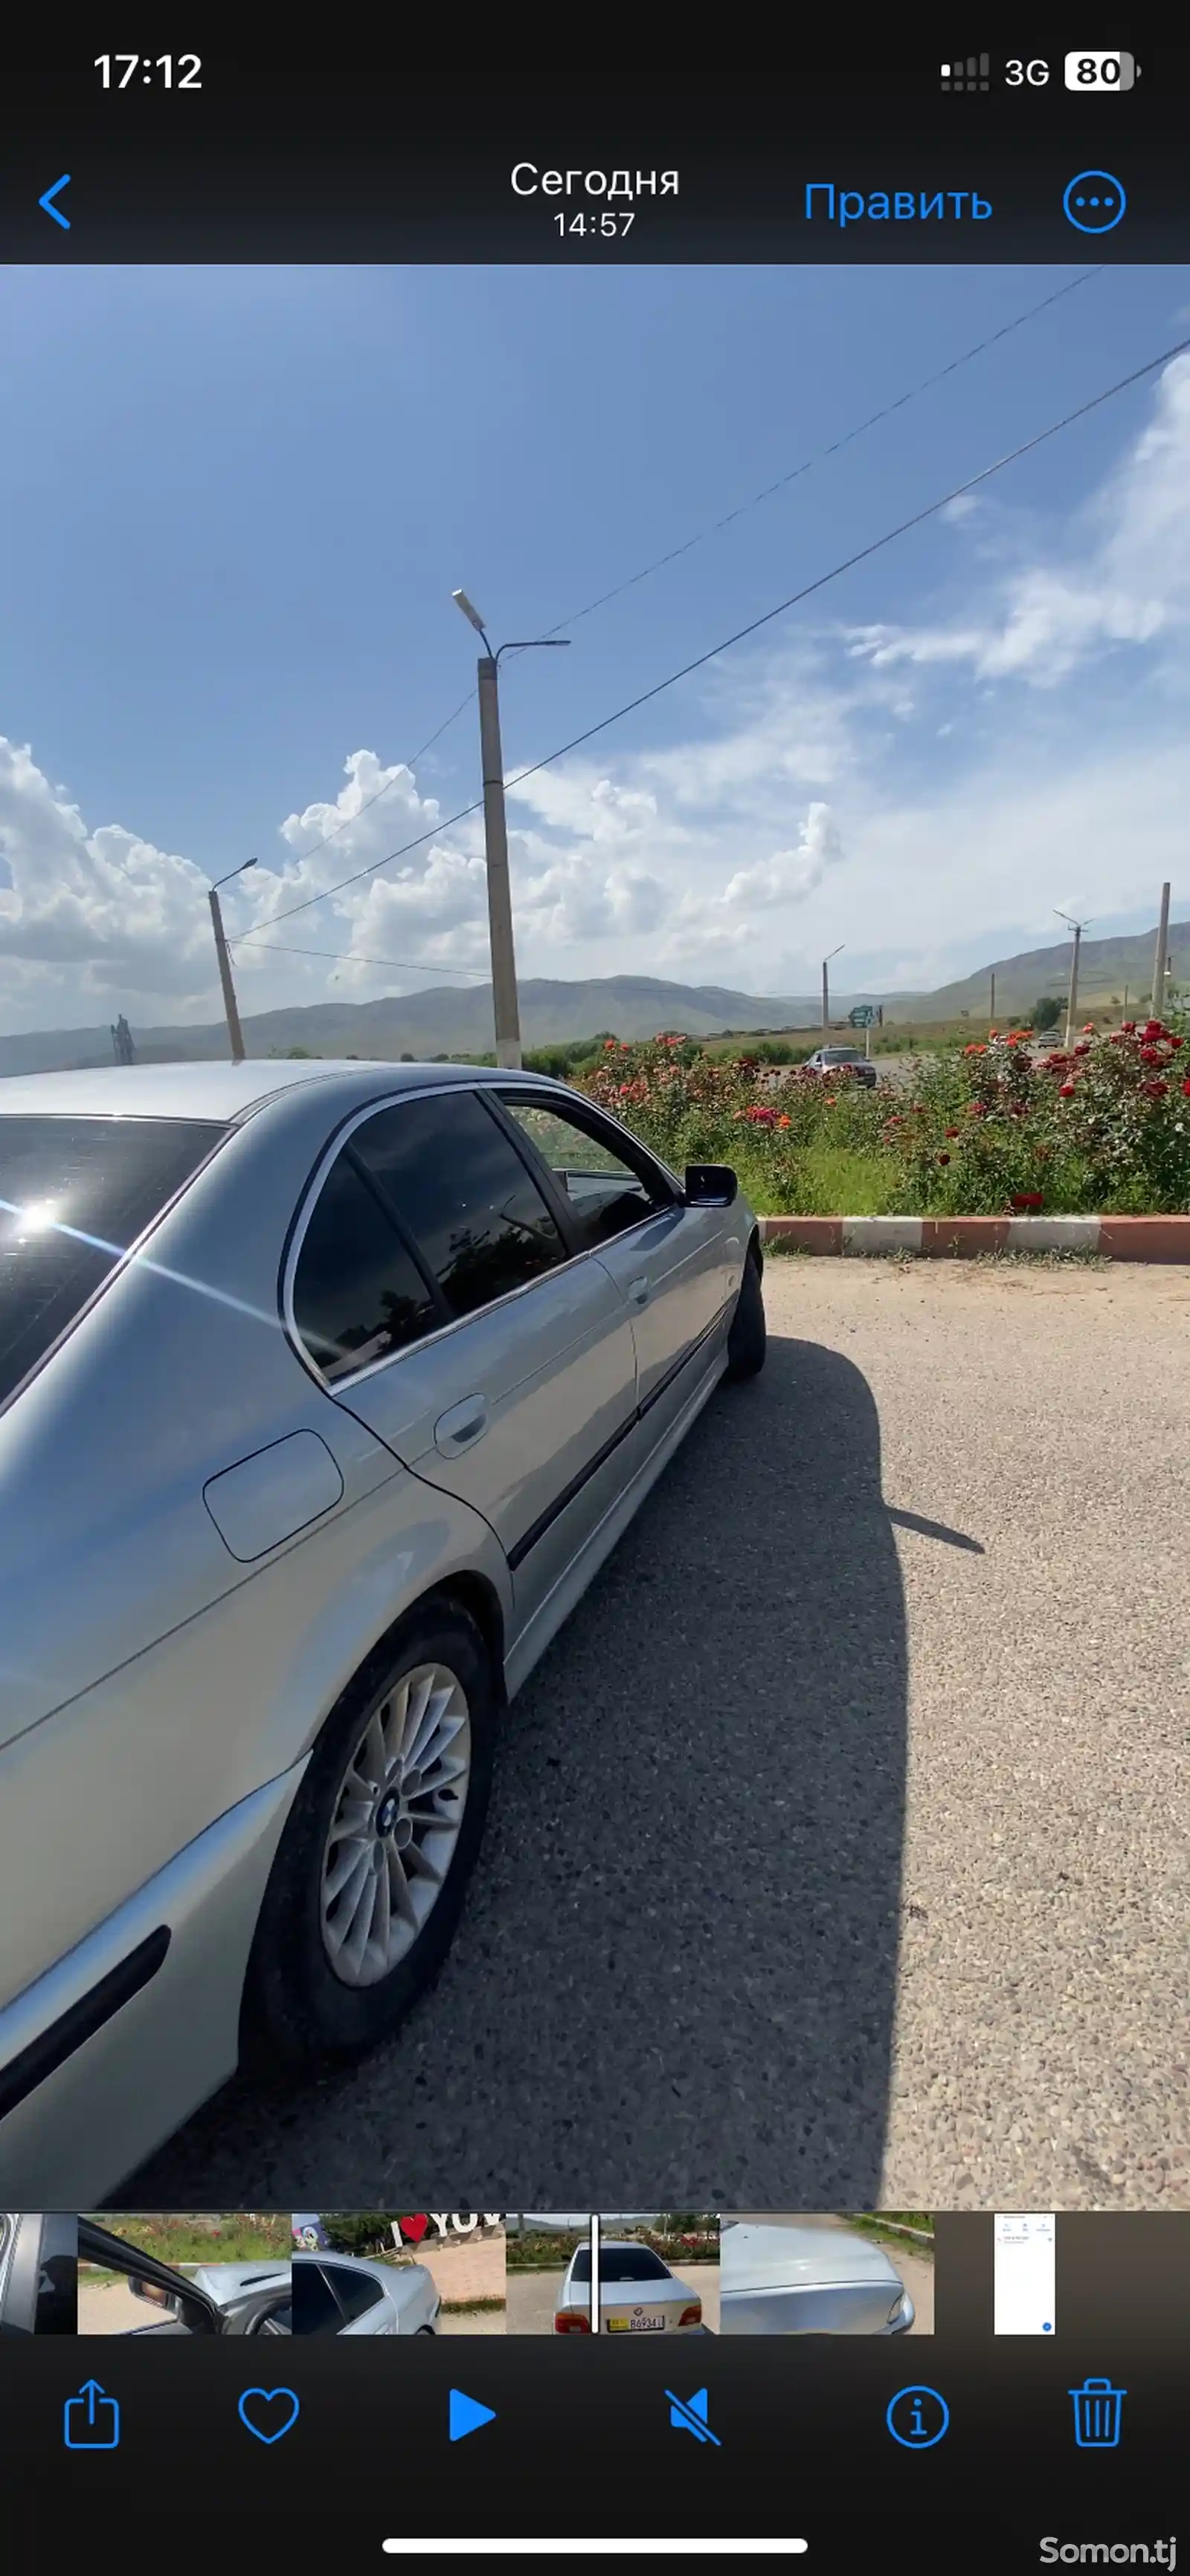 BMW 5 series, 1999-6